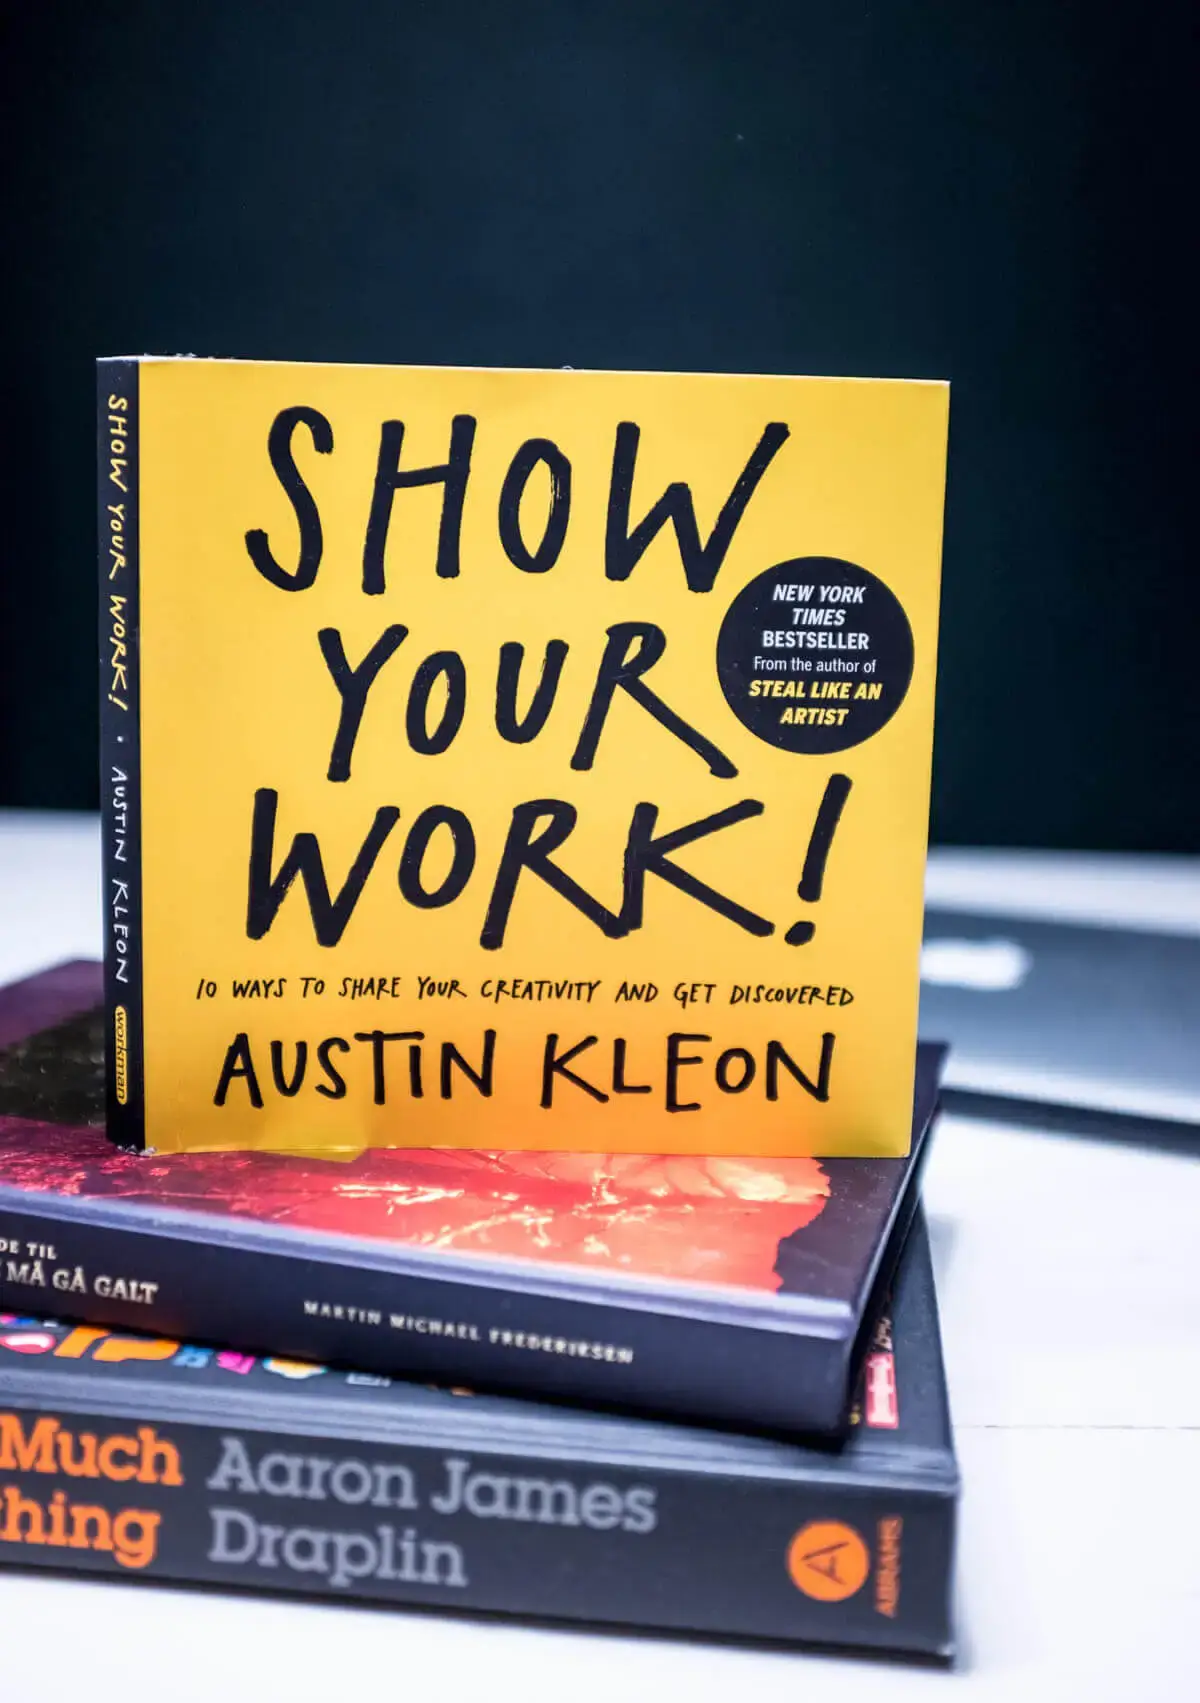 Austin Kleon's book "Show your work"